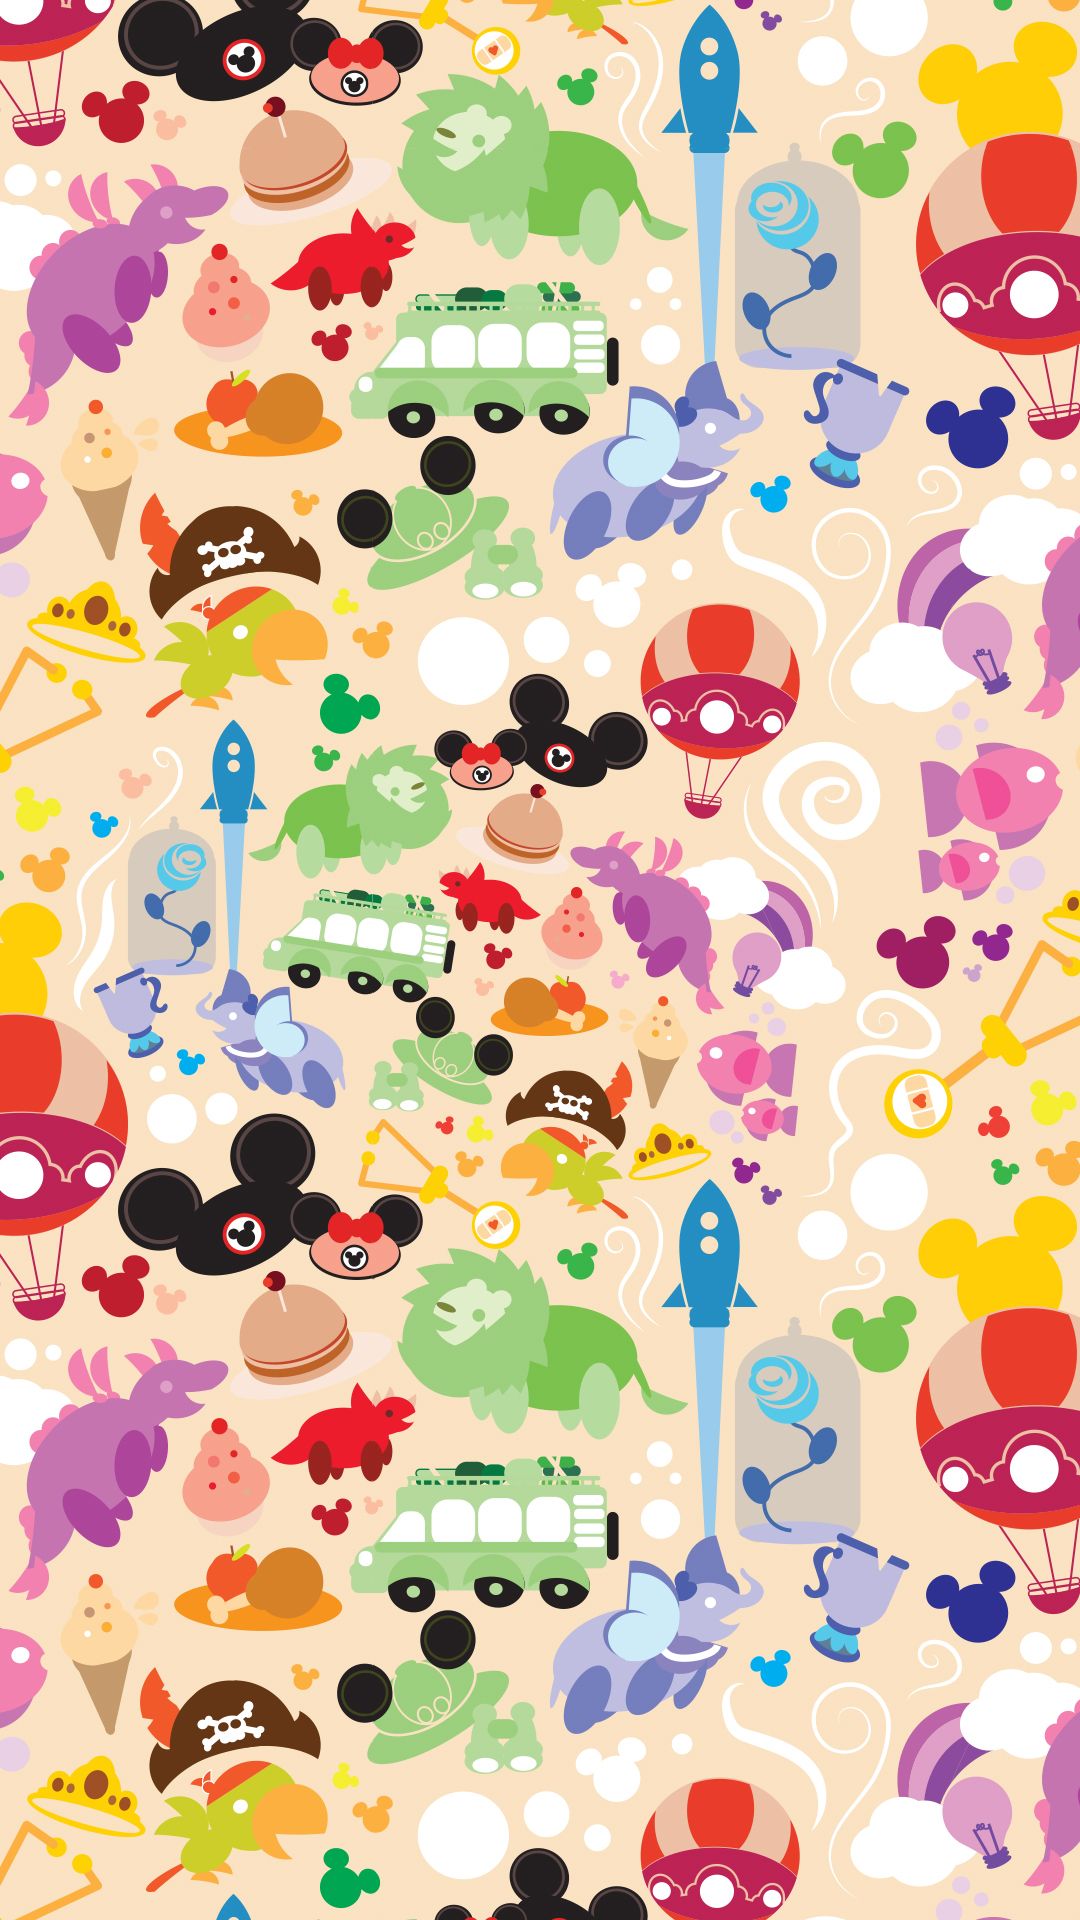 DisneyKids: Download Our Playful Walt Disney World Resort Wallpaper. Disney Parks Blog